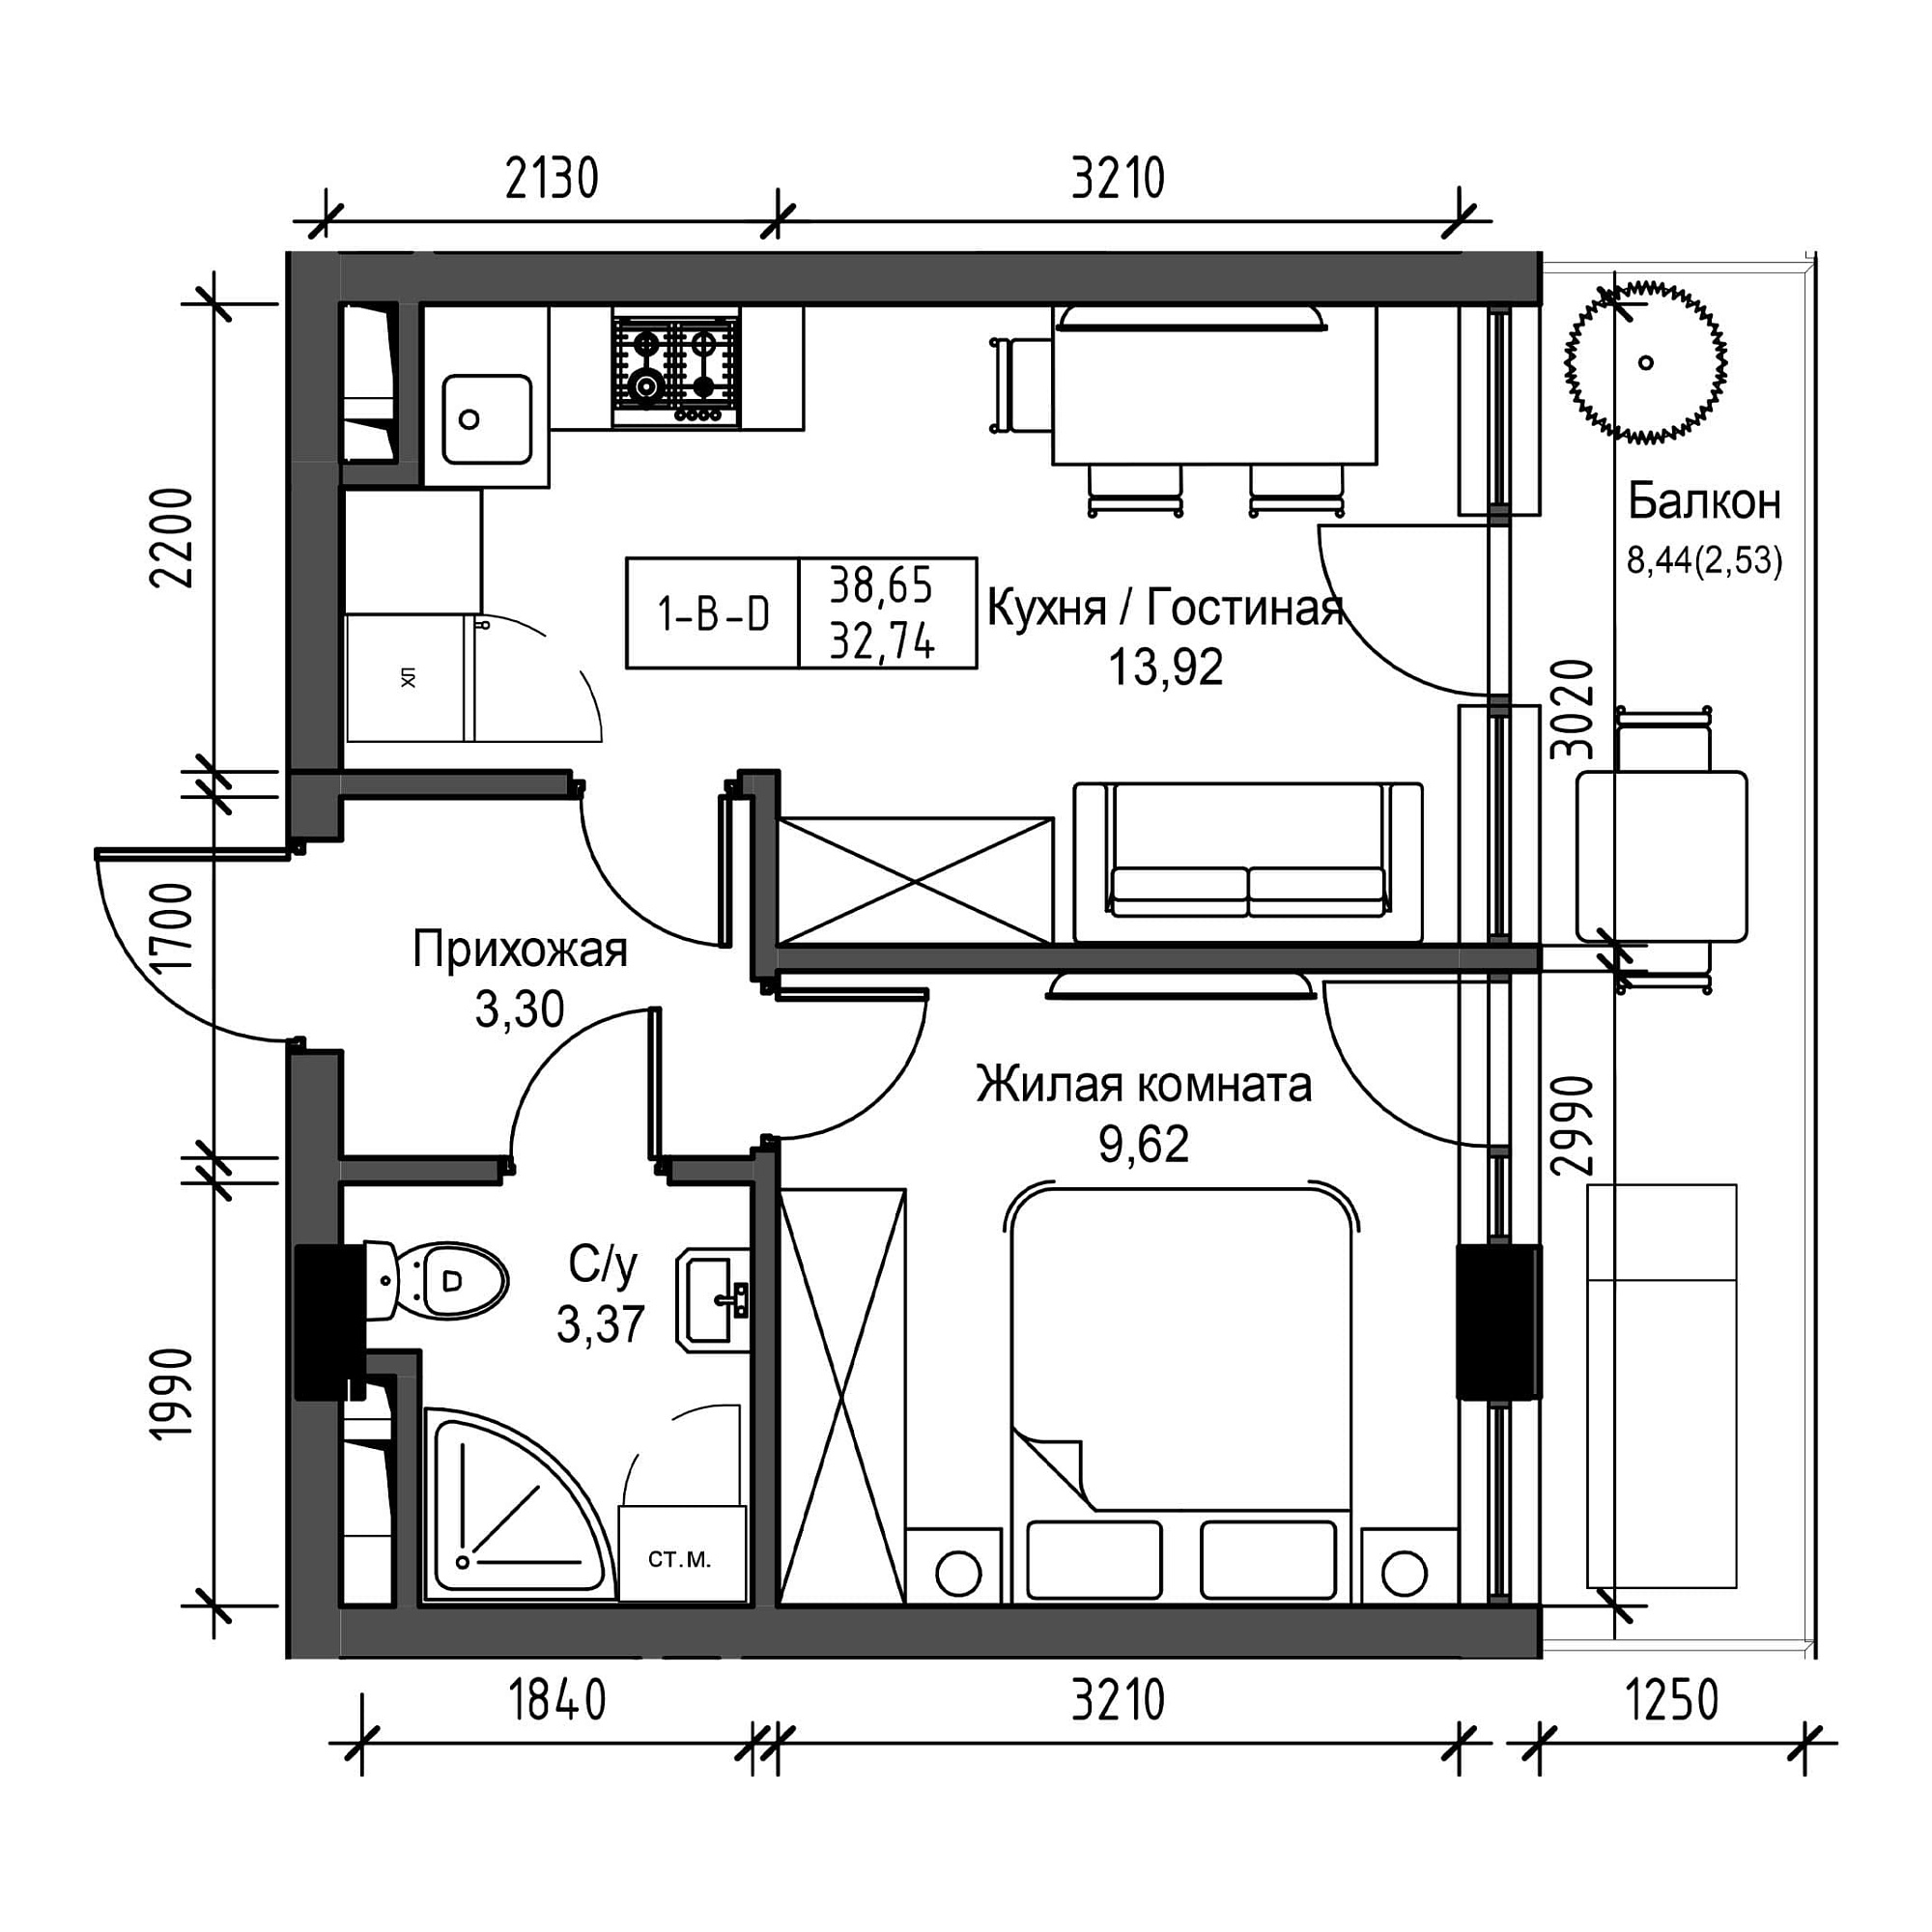 Planning 1-rm flats area 32.74m2, UM-001-04/0022.